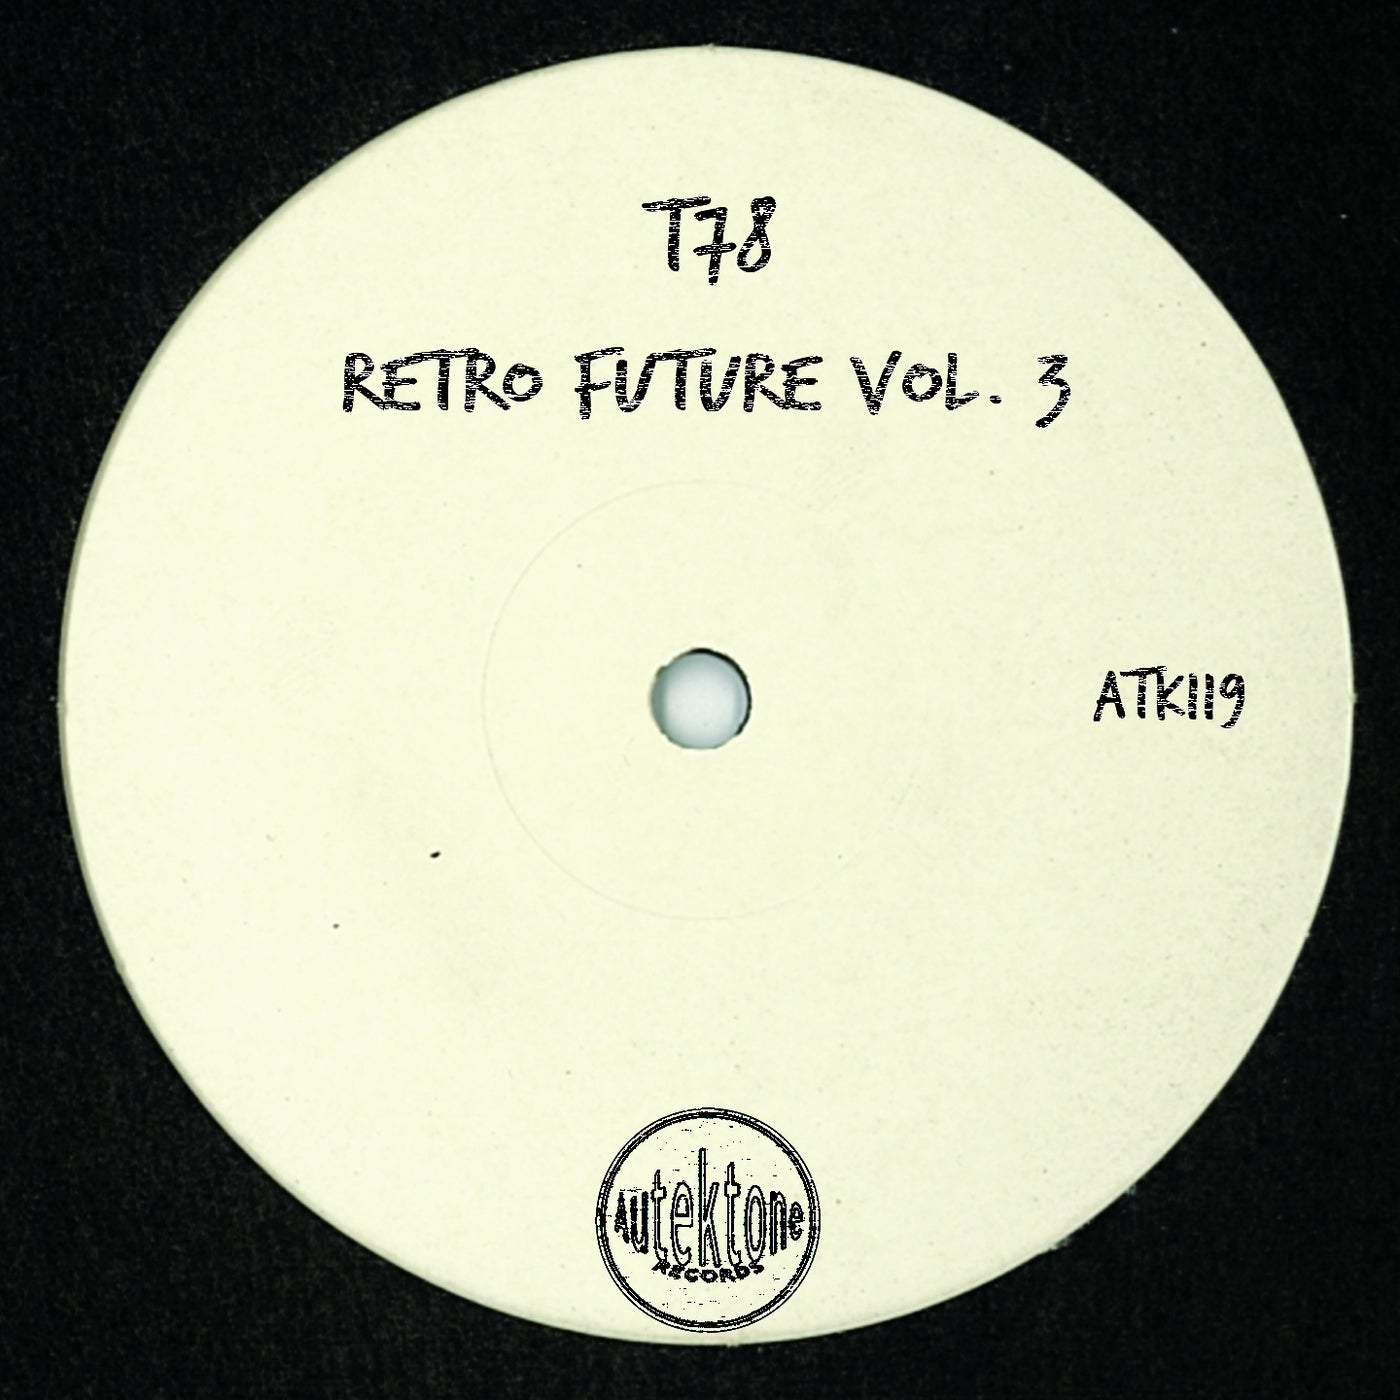 Download Zen, T78 - Retro Future, Vol. 3 on Electrobuzz